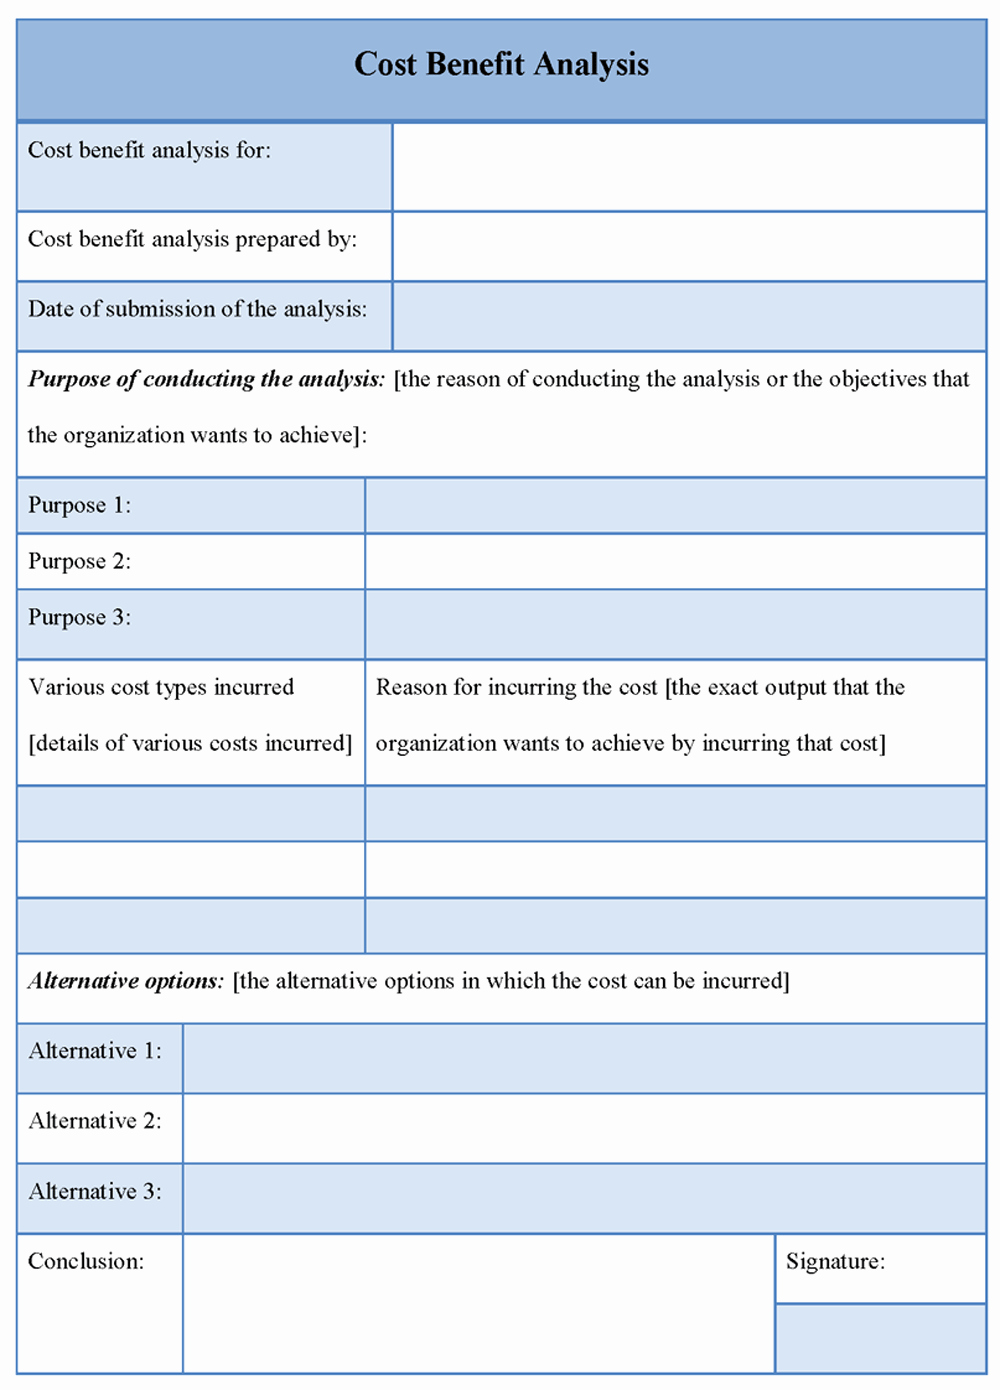 Cost Benefit Analysis Excel Template Elegant Cost Benefit Analysis Template